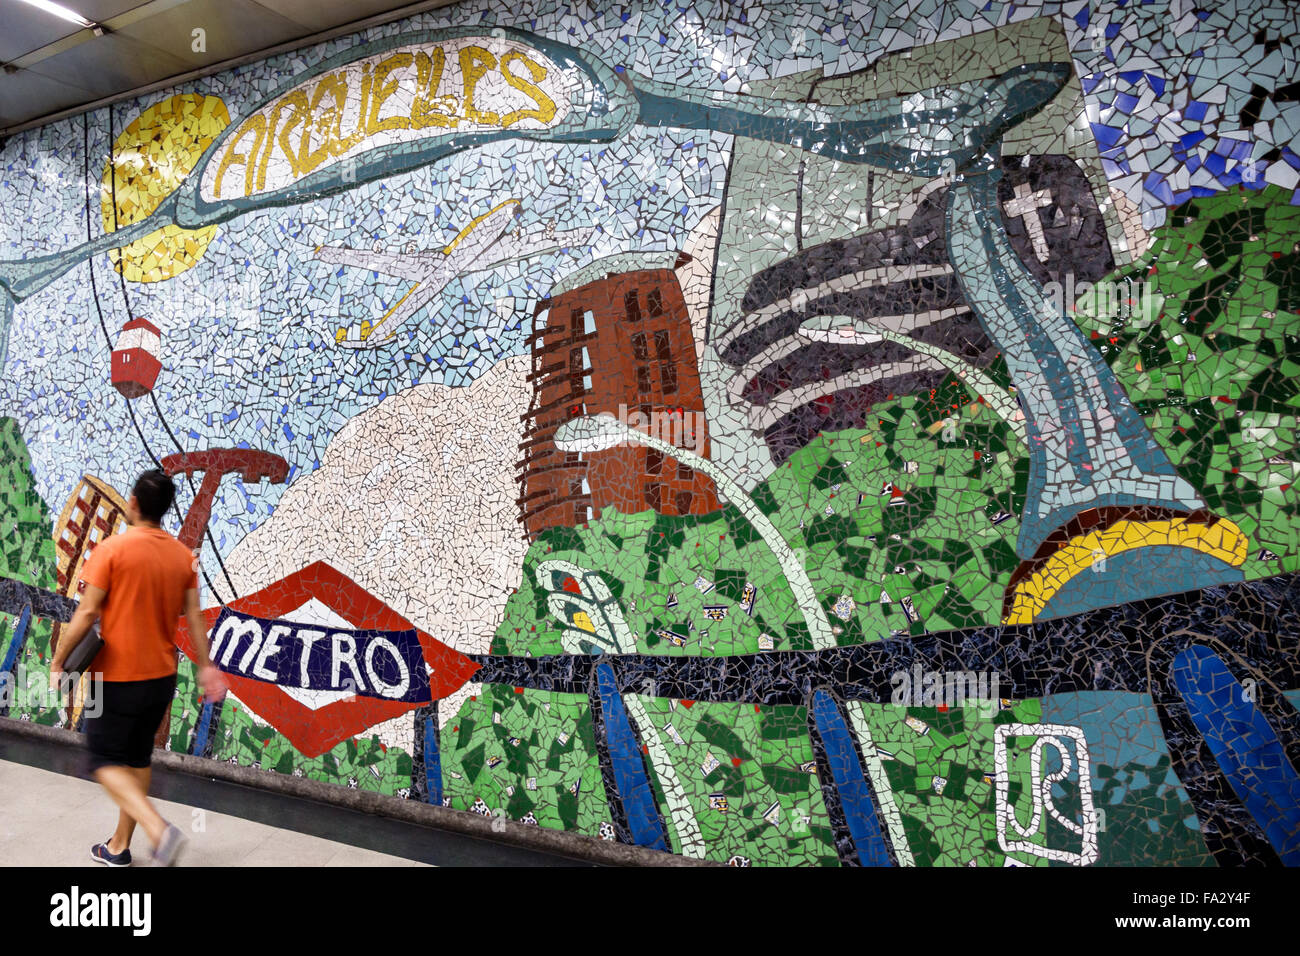 Madrid Spain,Hispanic Moncloa-Aravaca,Arguelles Metro Station,subway,train,mosaic tile mural,art,Spain150706096 Stock Photo